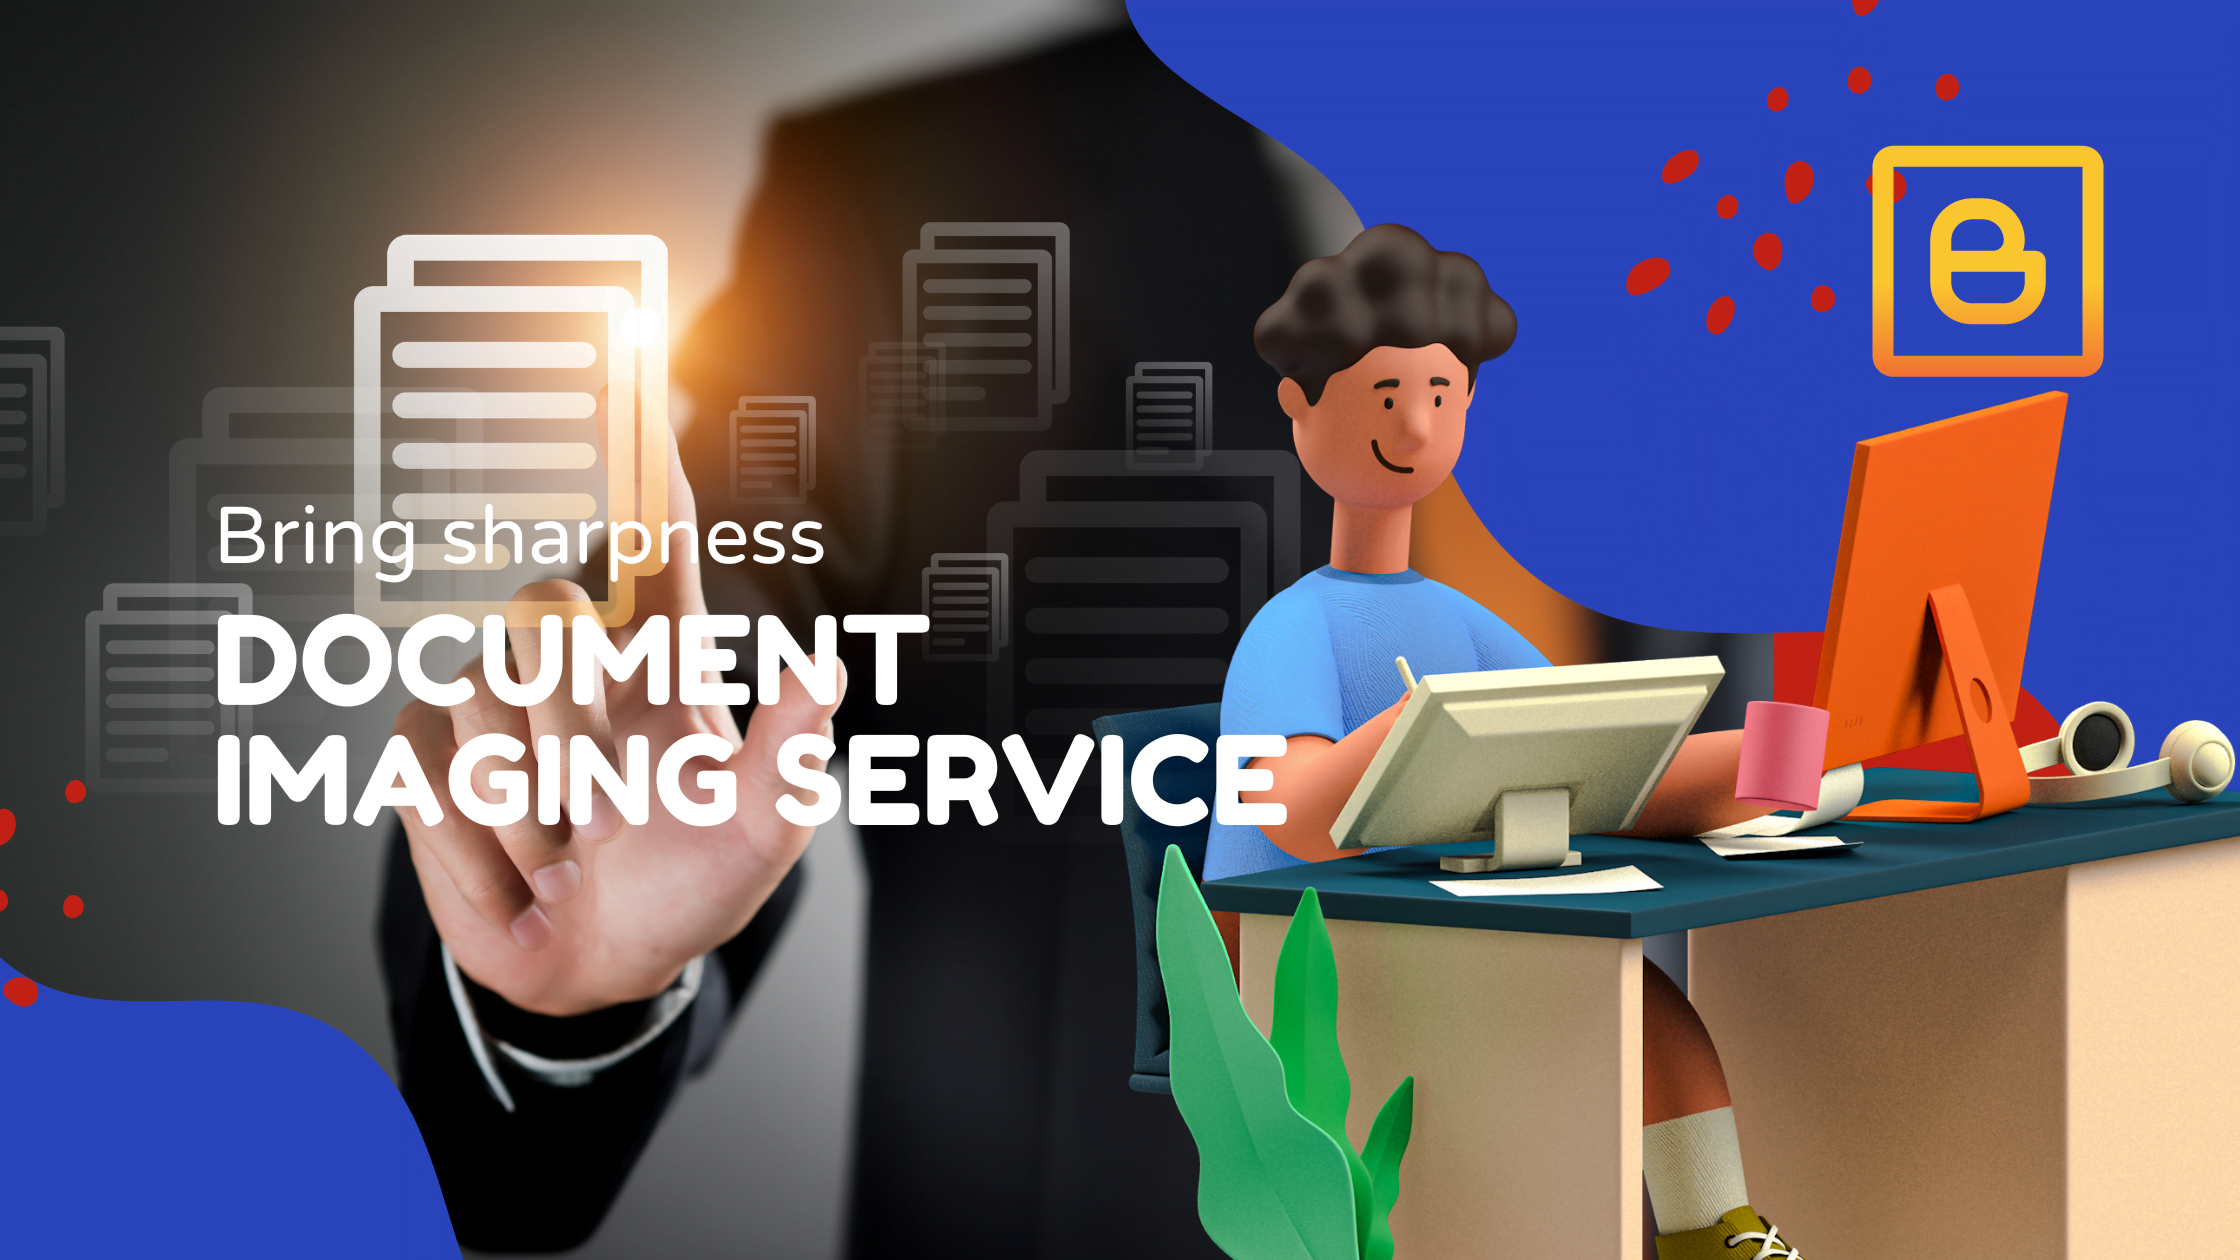 Document imaging service